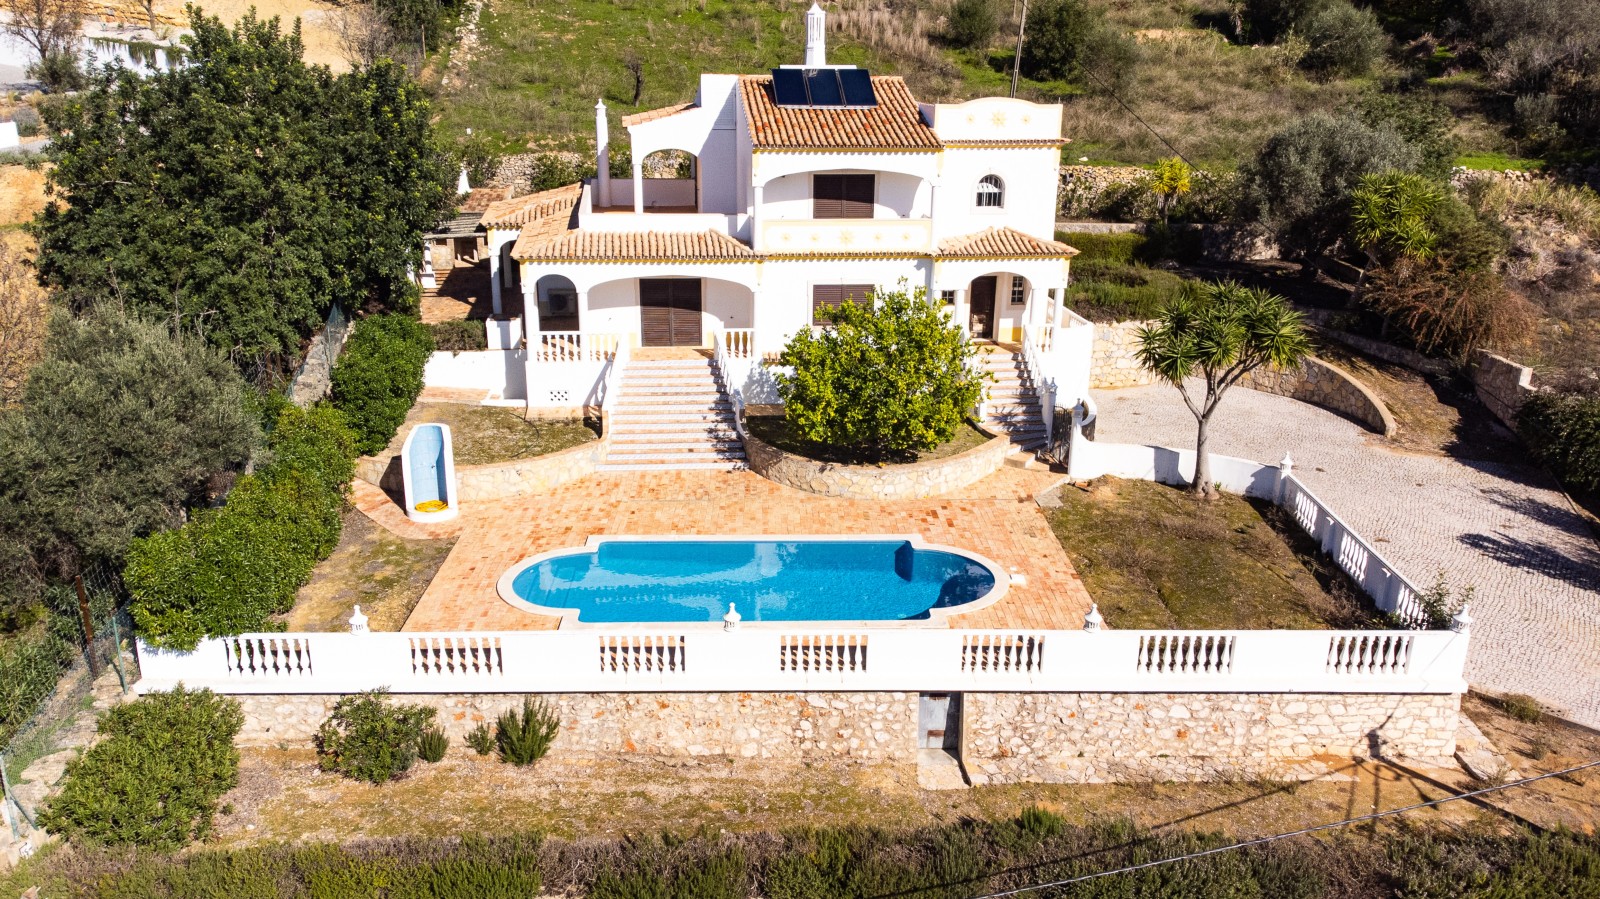 4-Bedroom Villa with swimming pool, for sale in Boliqueime, Loulé, Algarve_267417